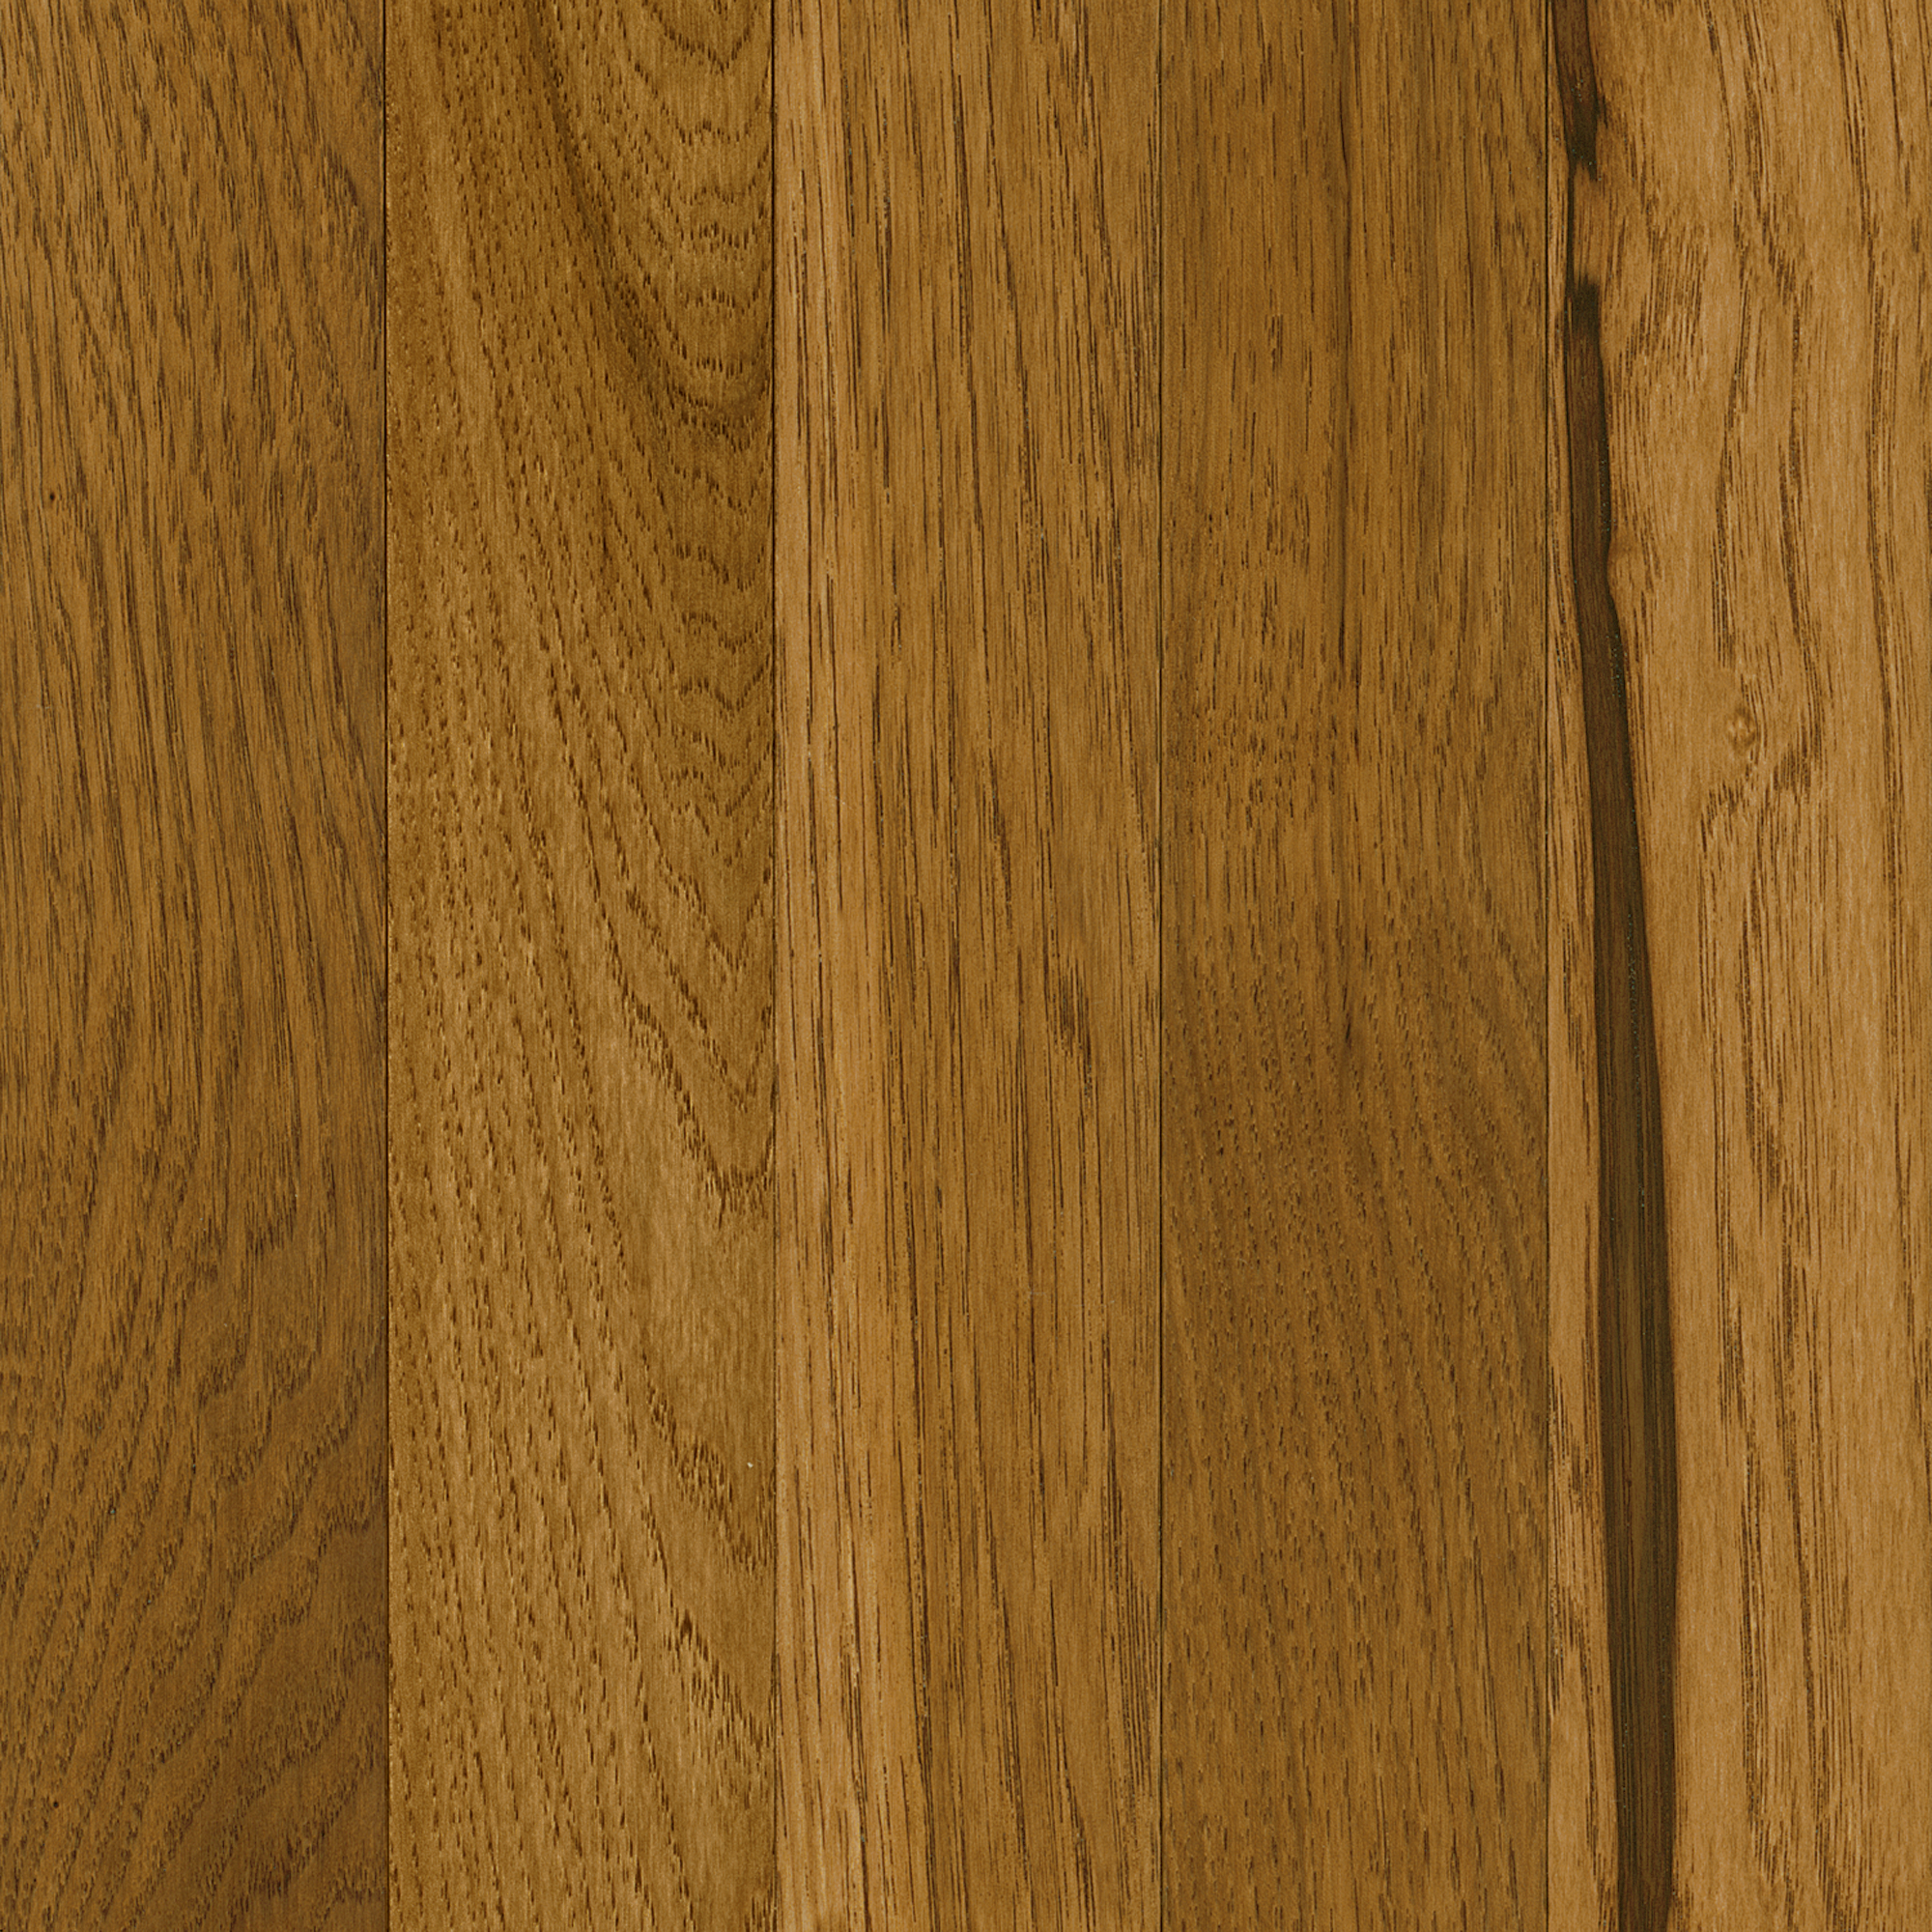 Hickory Solid Hardwood Aph5402, Sweet Hardwood Floors